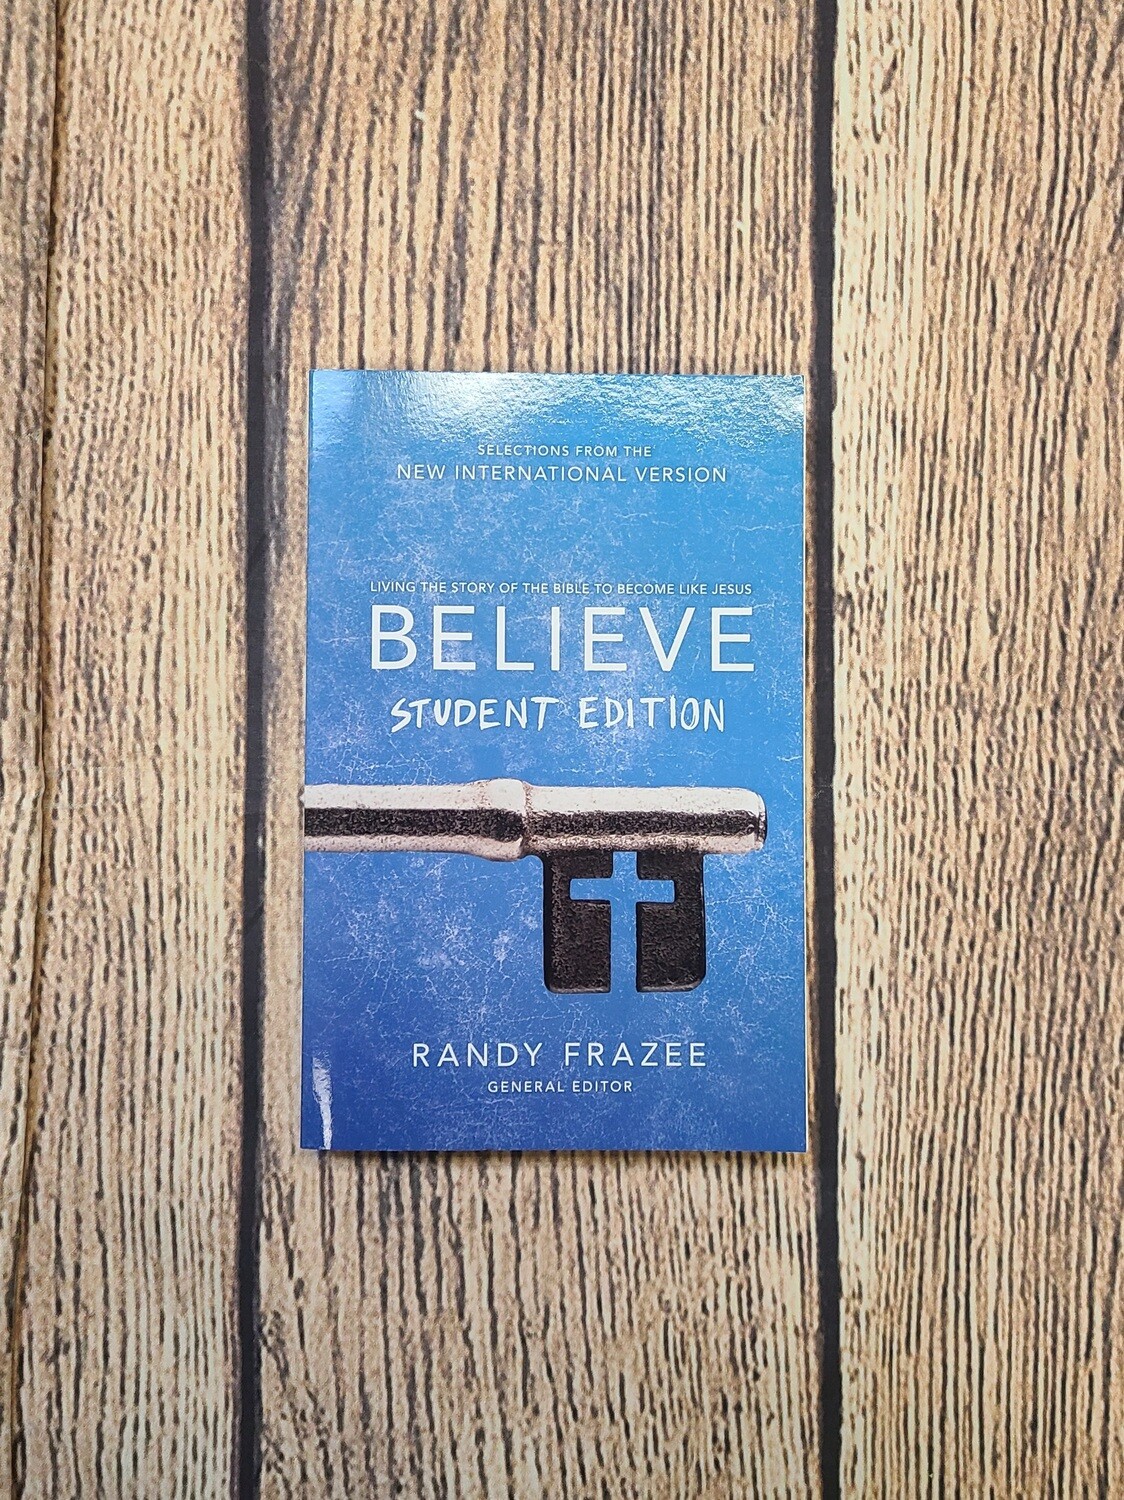 NIV Believe: Student Edition by Randy Frazee